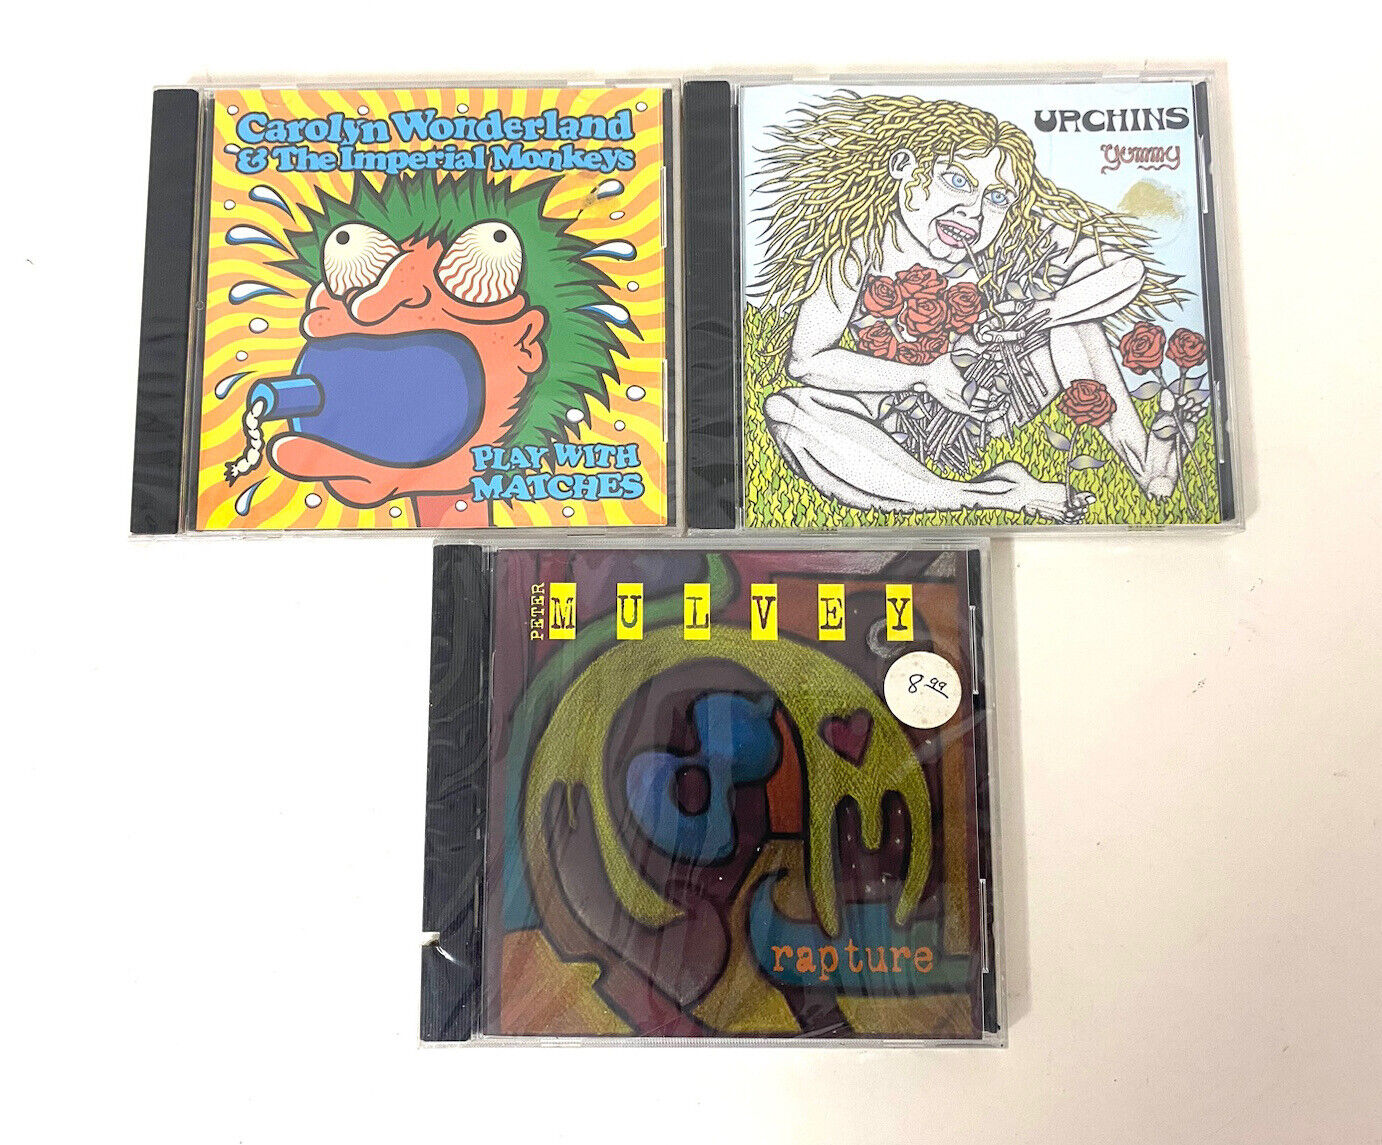 SEALED CD Play with Matches Carolyn Wonderland & Imperial Monkeys +Urchins Yummy